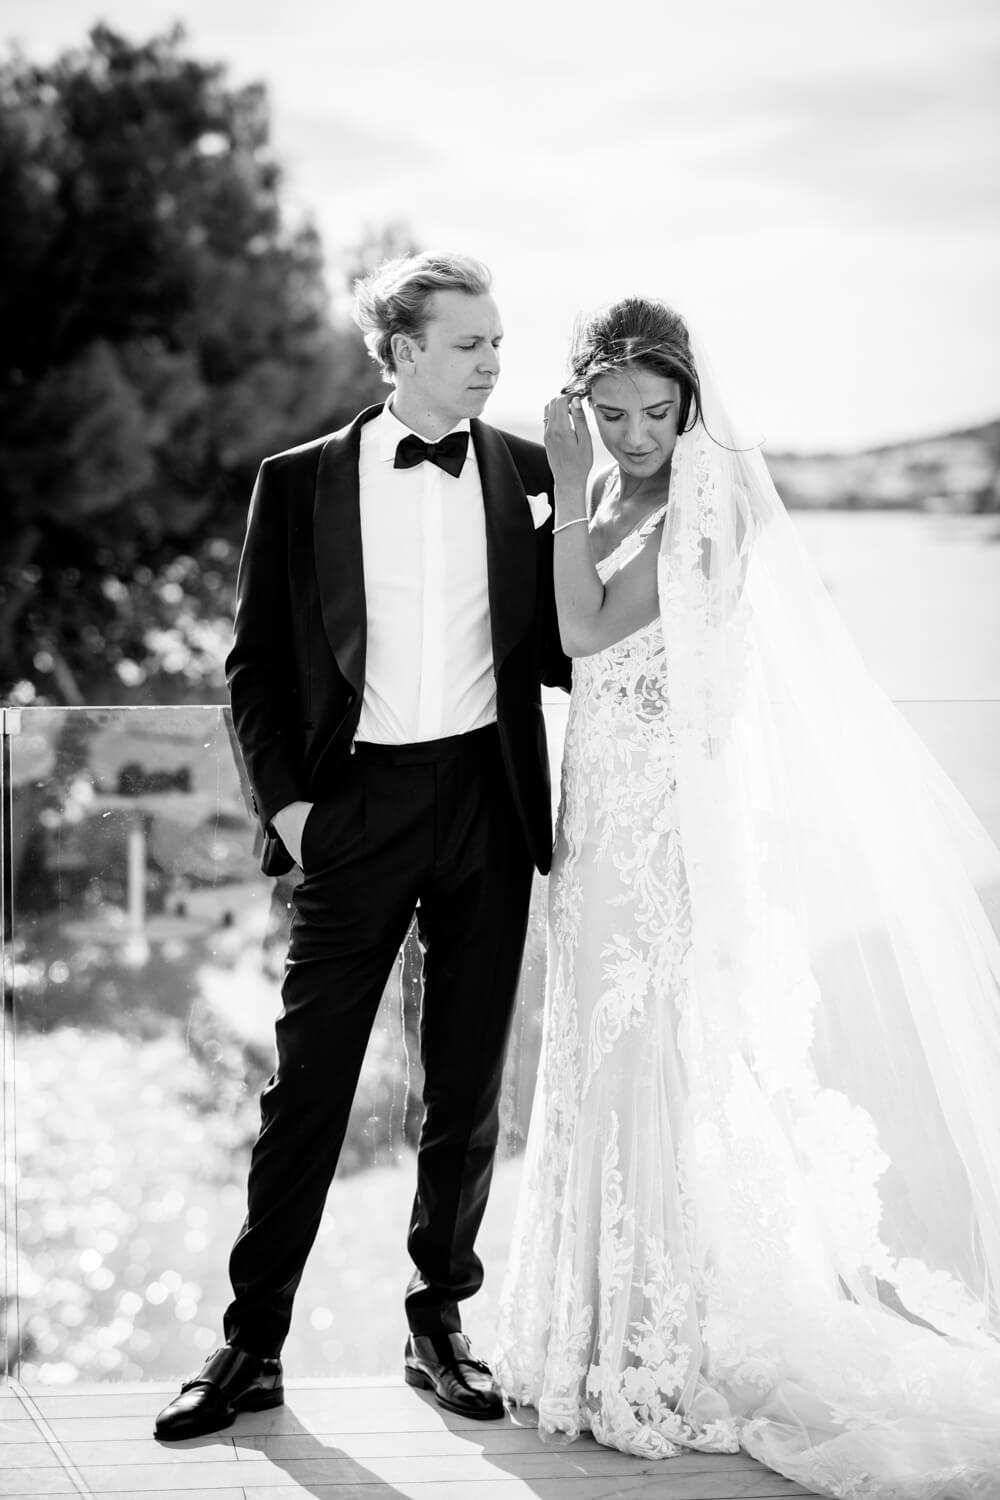 Monochrome - BnW bride and groom Ibiza at Nikki beach